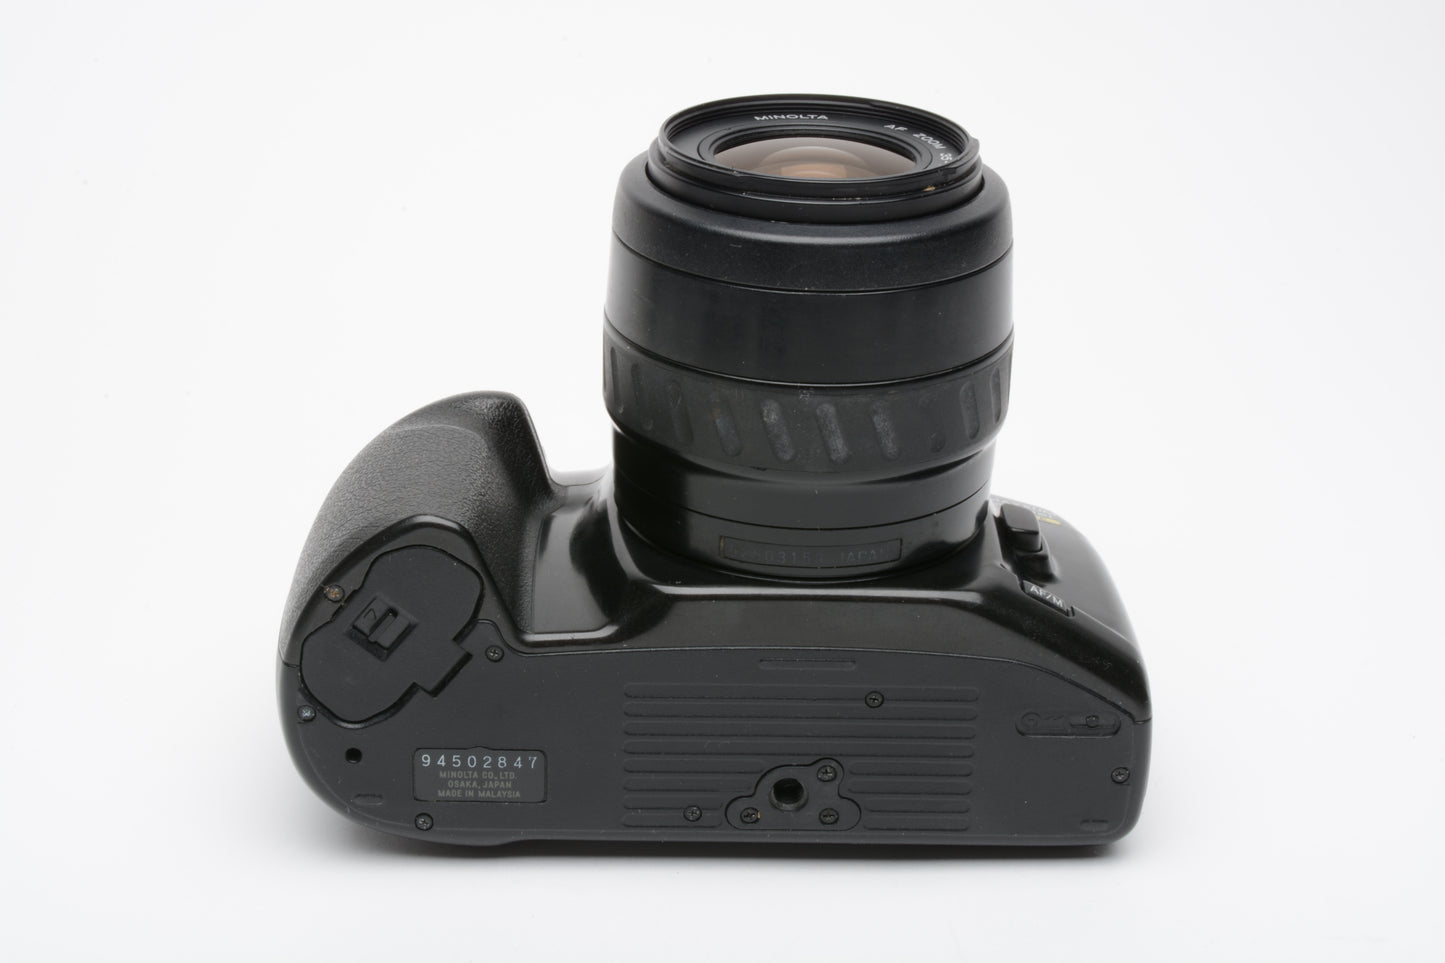 Minolta Maxxum 350si Date 35mm SLR w/Maxxum AF 35-70mm, strap, tested